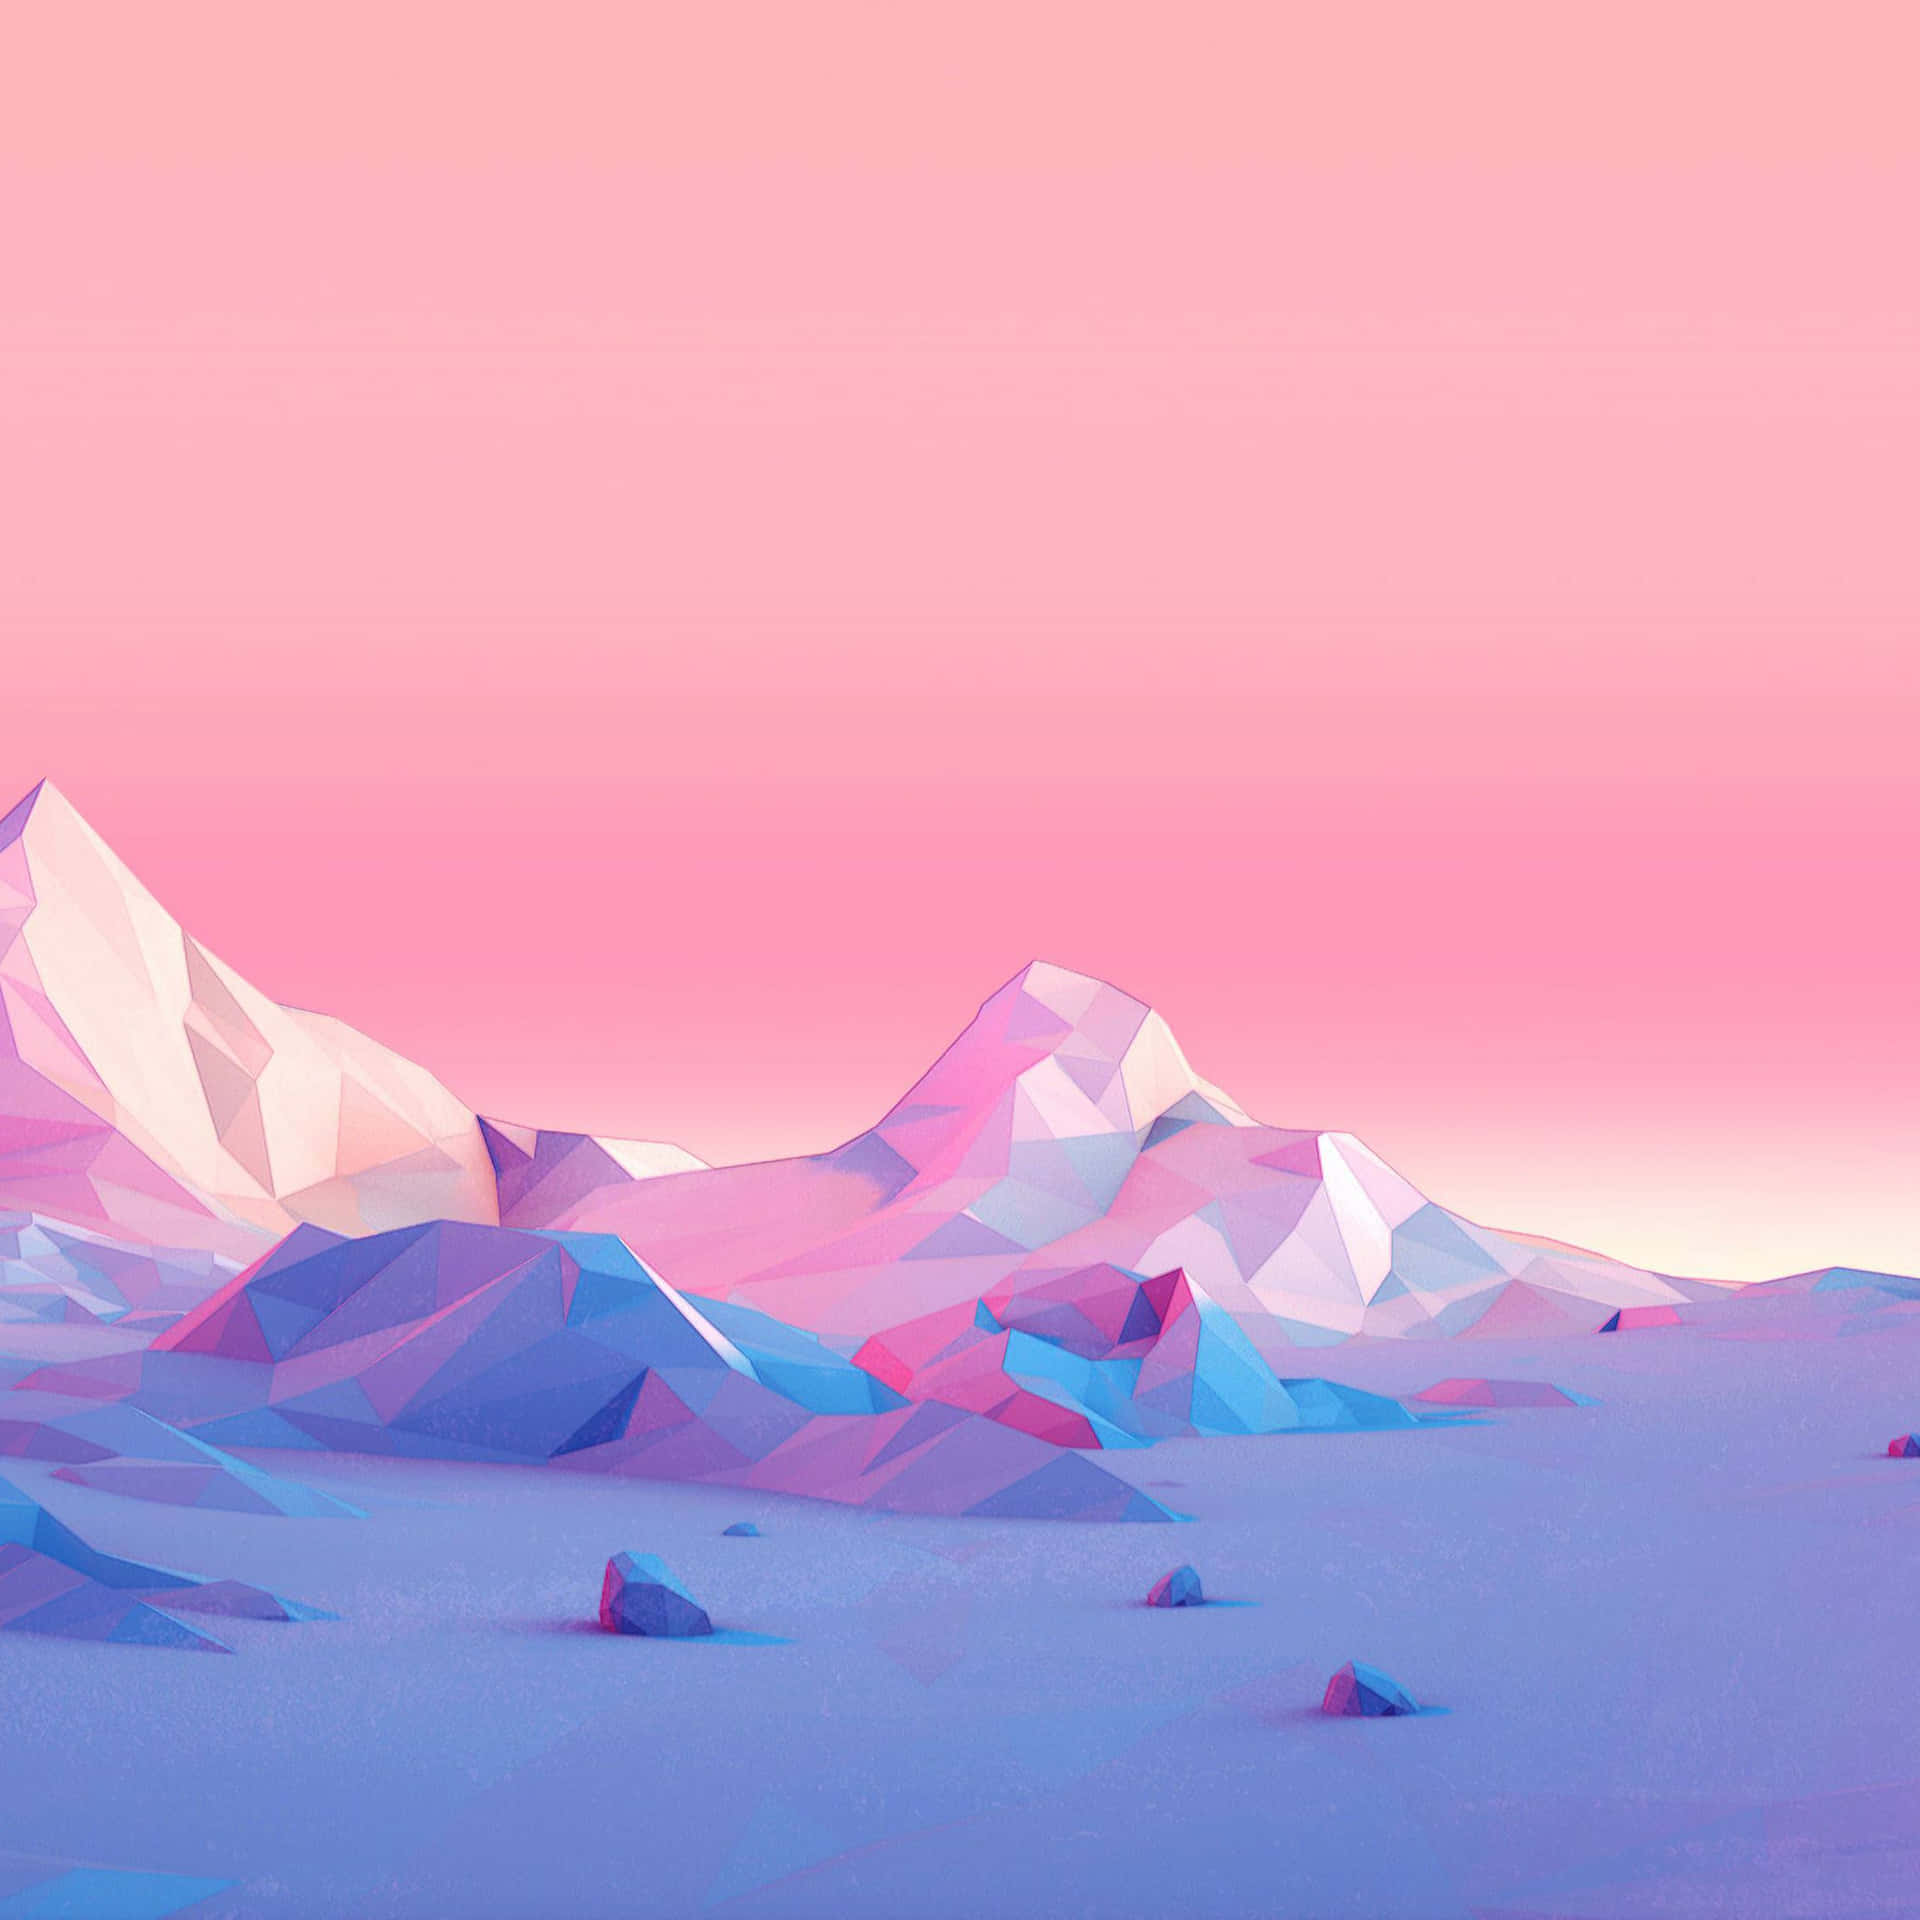 Pink Ipad IOS Aesthetic Background Wallpaper